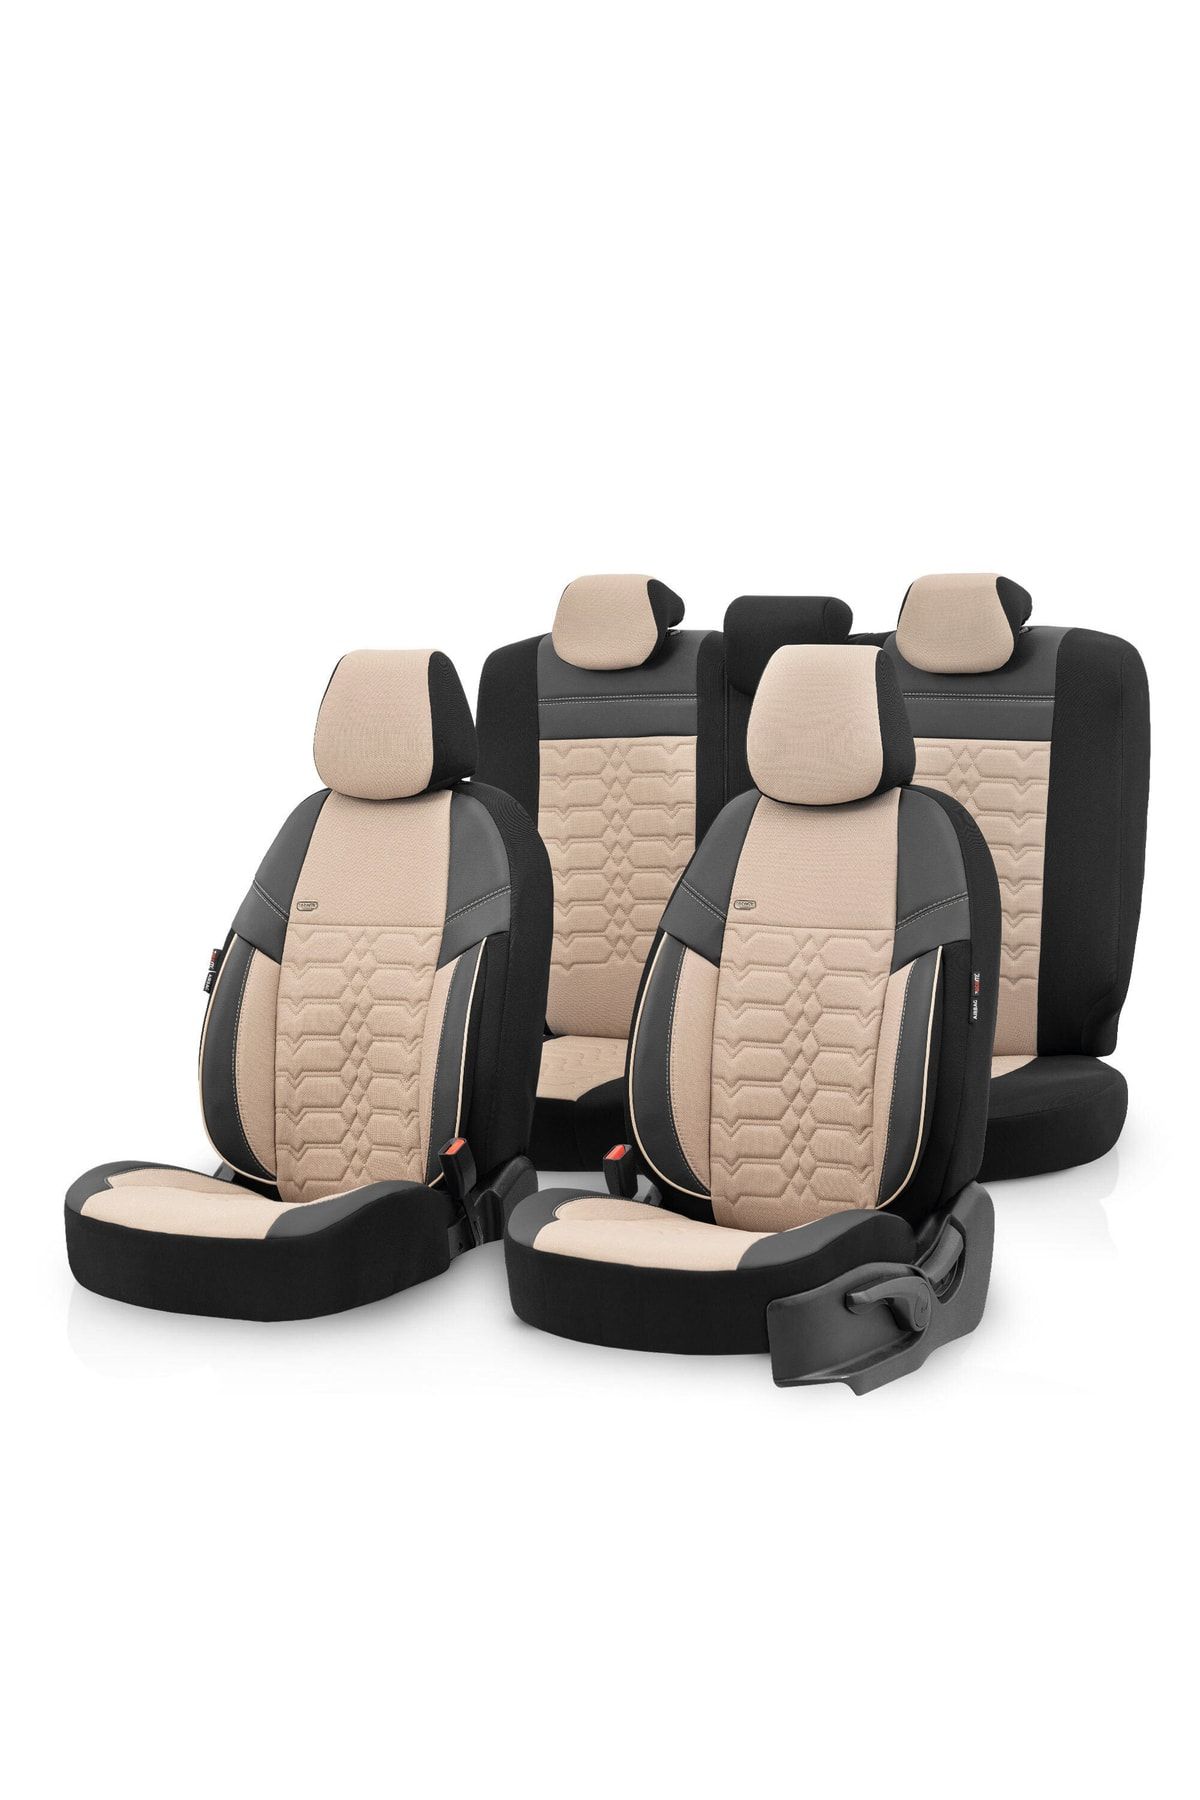 Otom Elegance Design Universal Seat Cover Black-beige